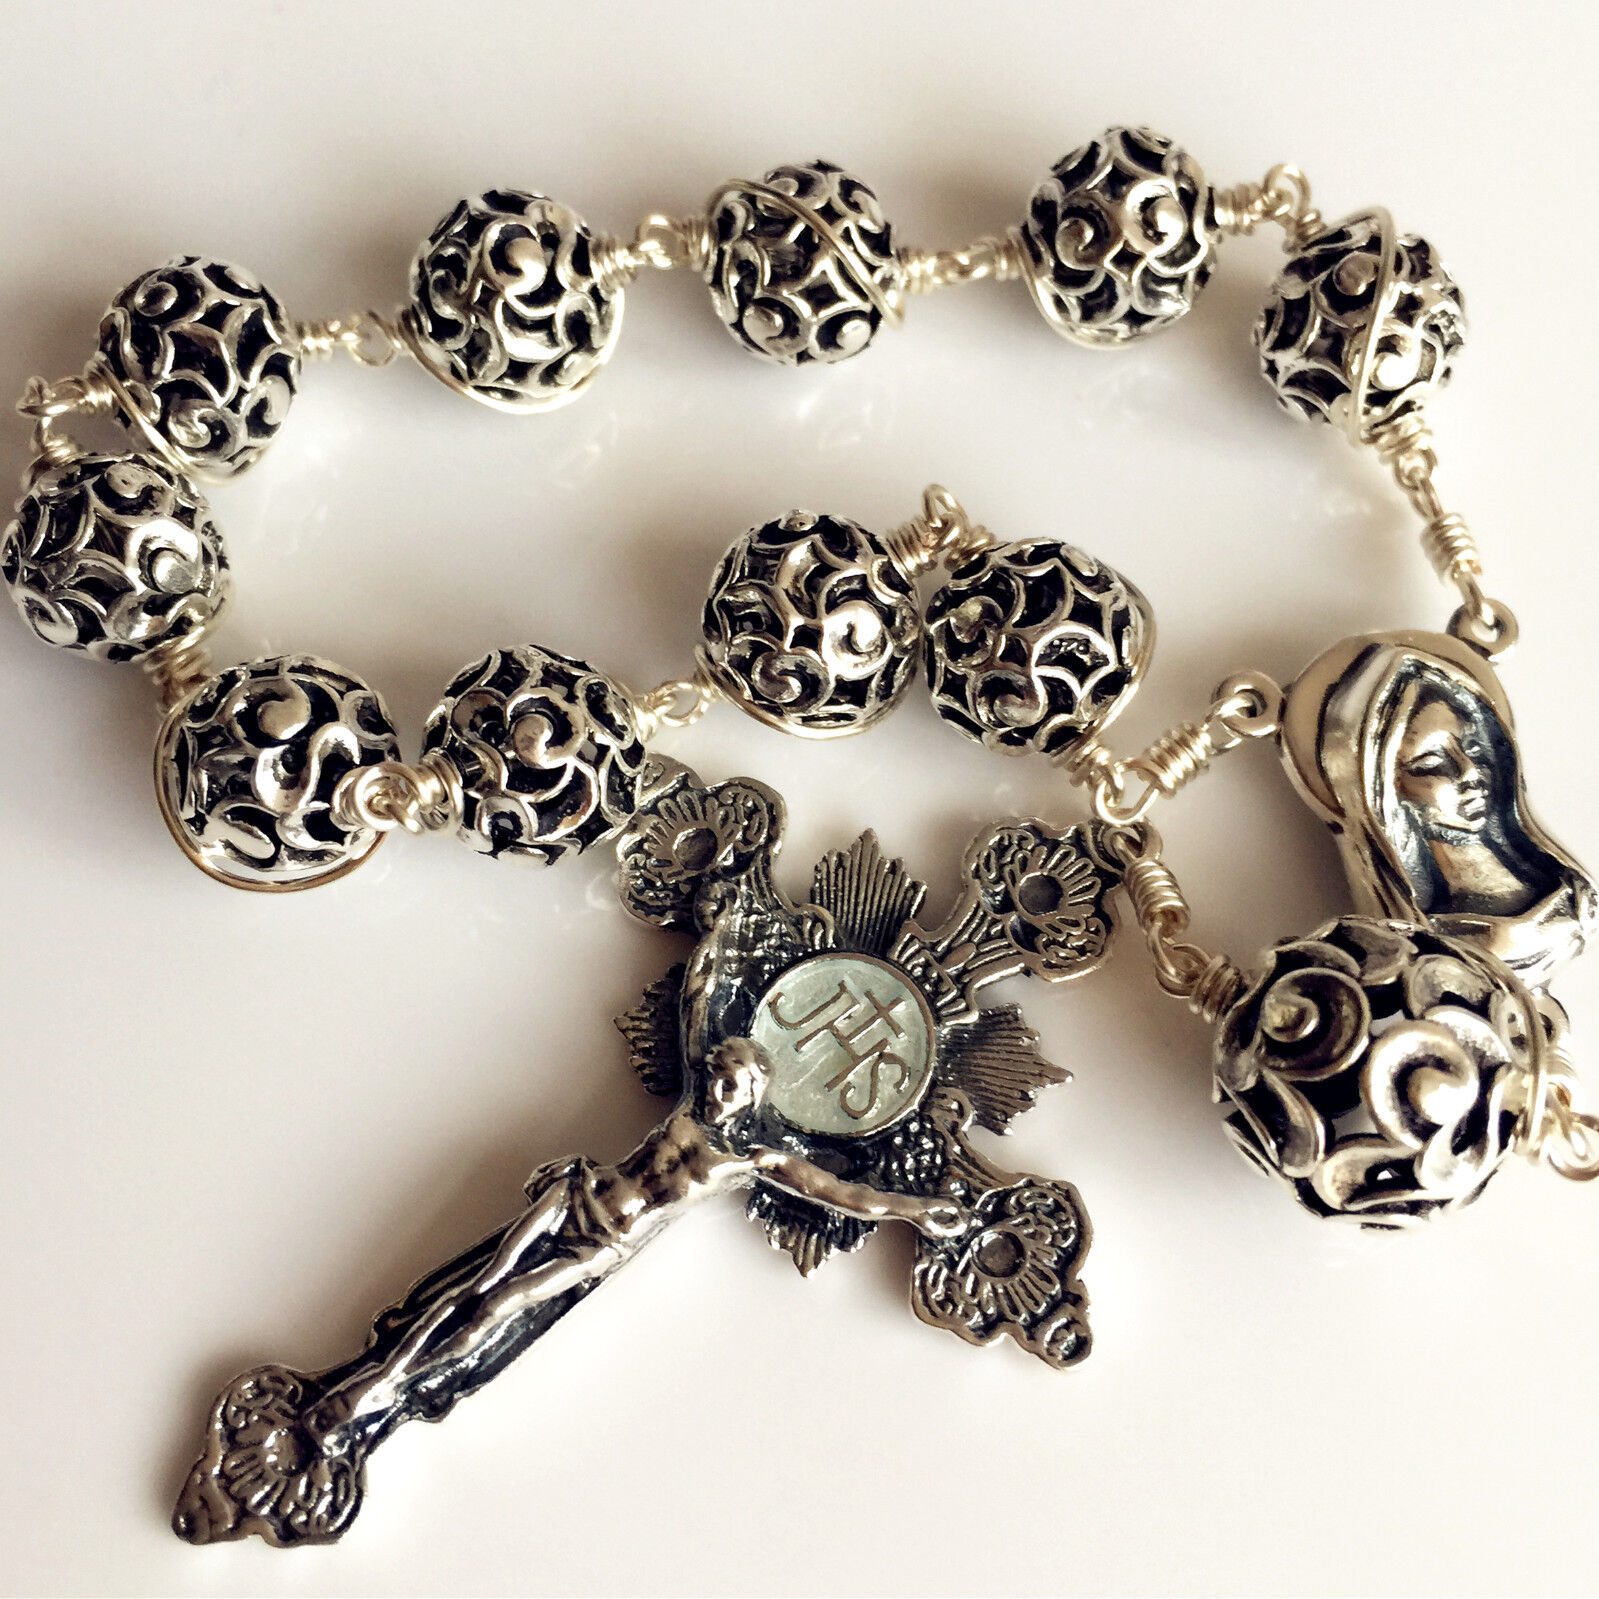 Bali Sterling Silver Beads Cross Handmade Wire Wrap one decade rosary bracelet